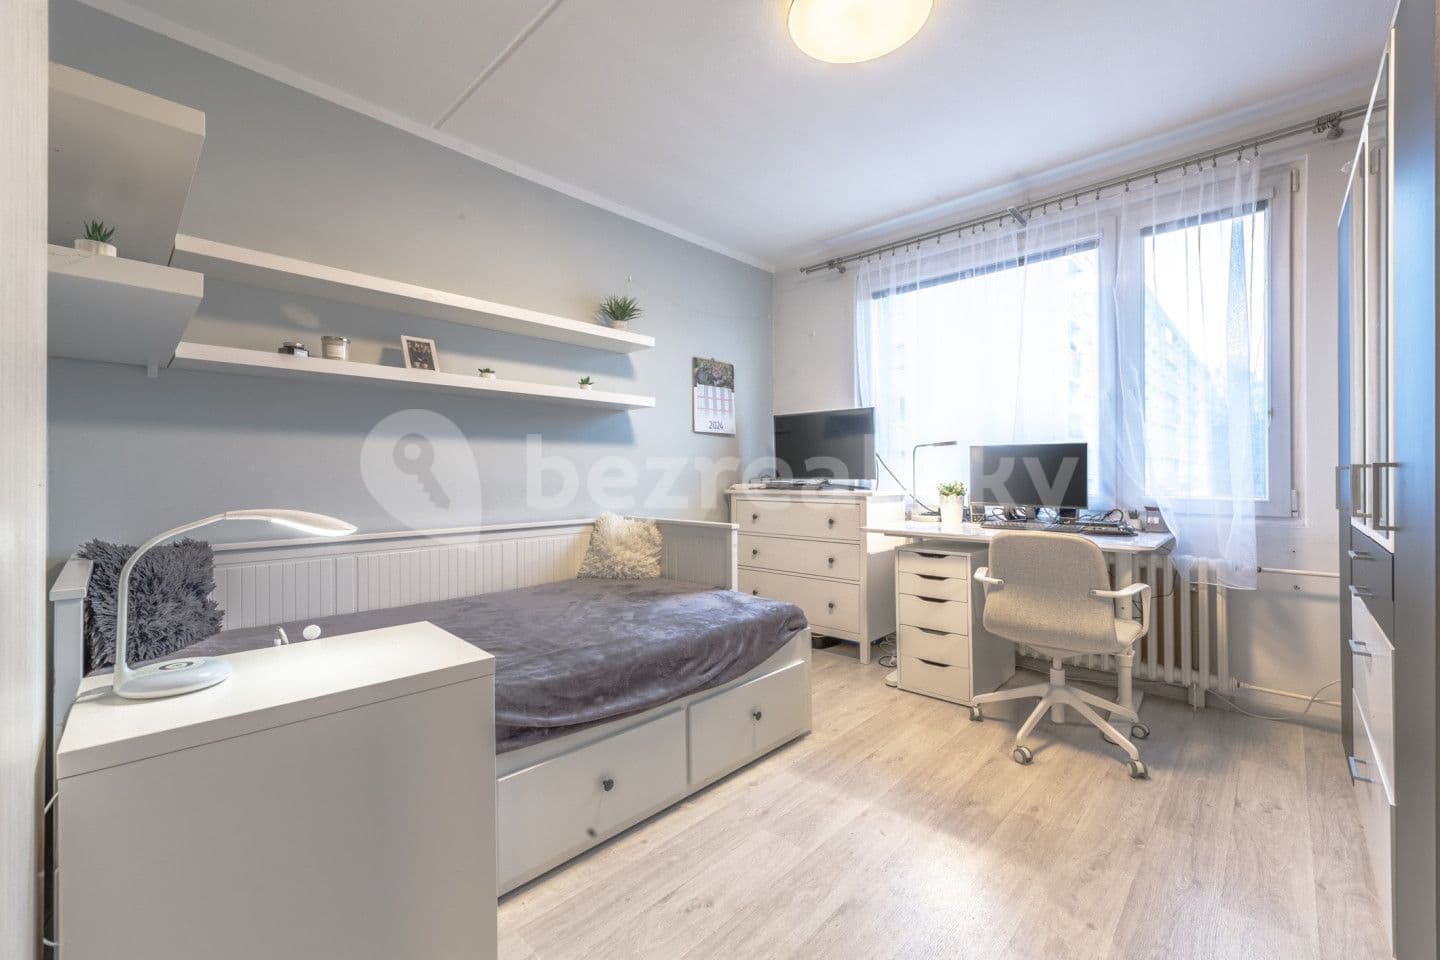 4 bedroom flat for sale, 71 m², Textilní, Semily, Liberecký Region